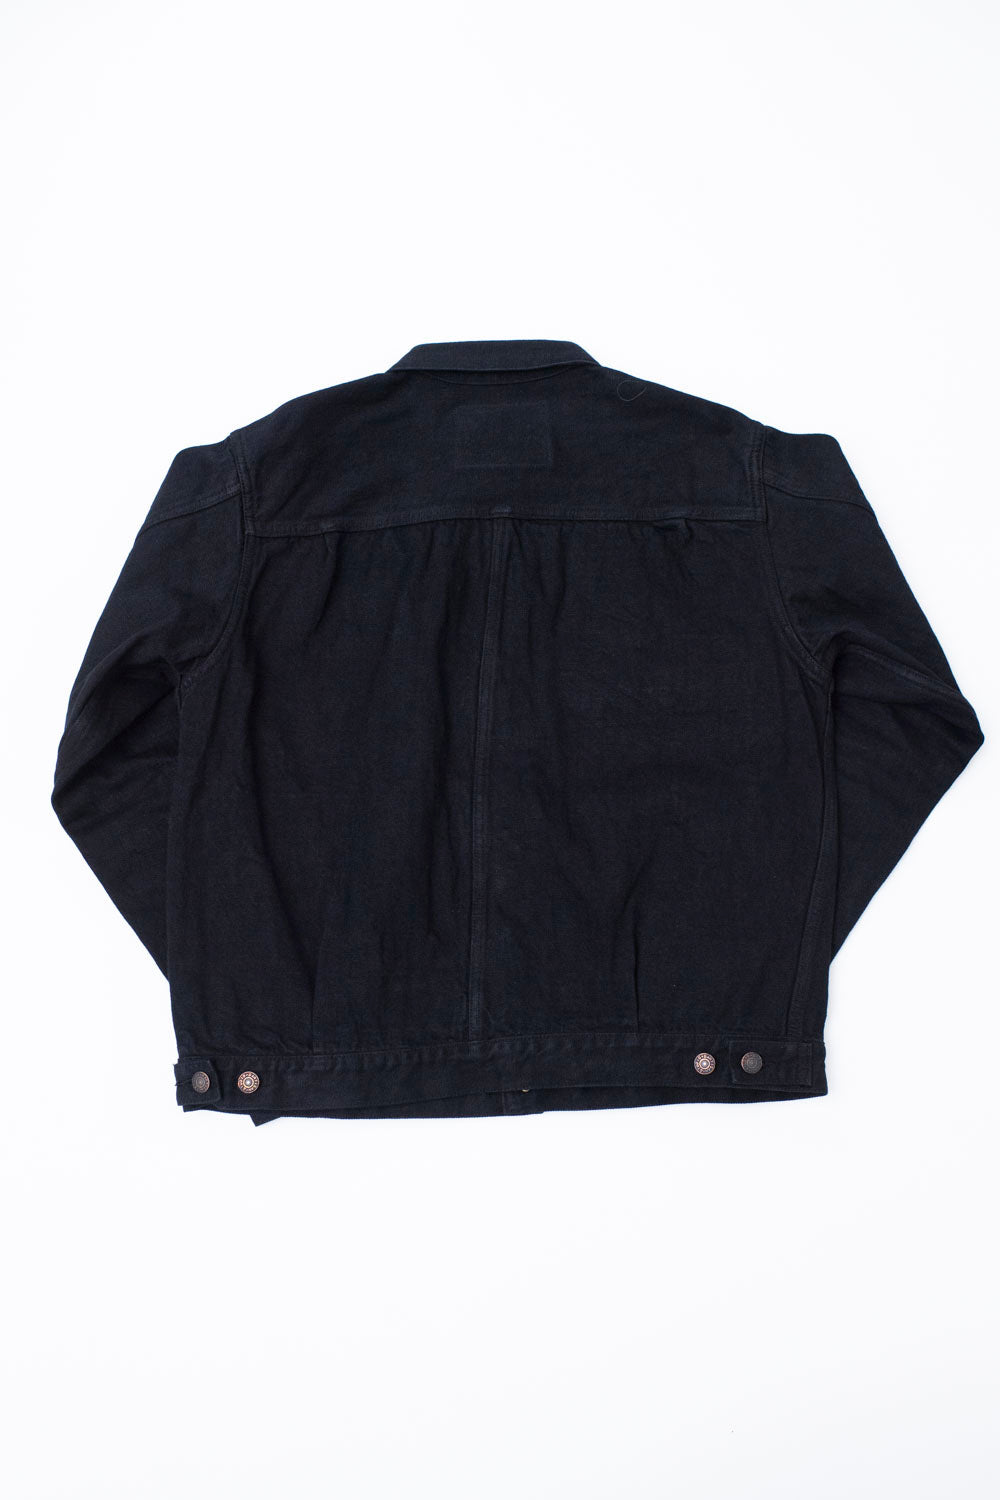 D555 Western Style Black Denim Jacket